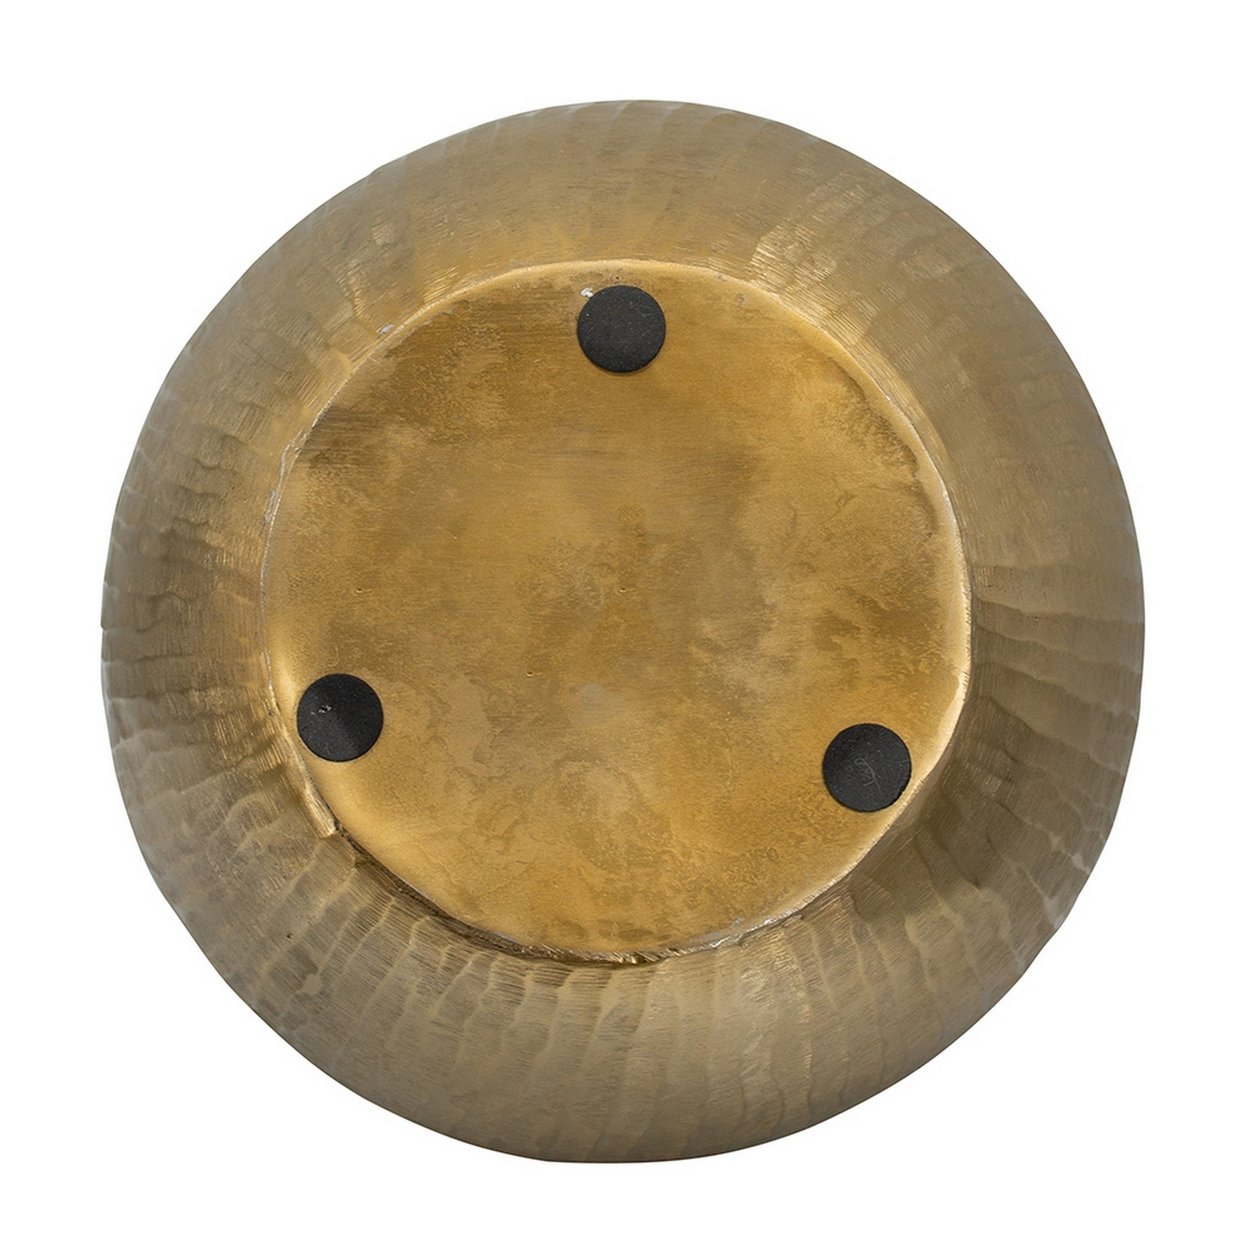 Kria 13 Inch Modern Vase, Curved Shape, Hammered Texture, Gold Metal Finish- Saltoro Sherpi